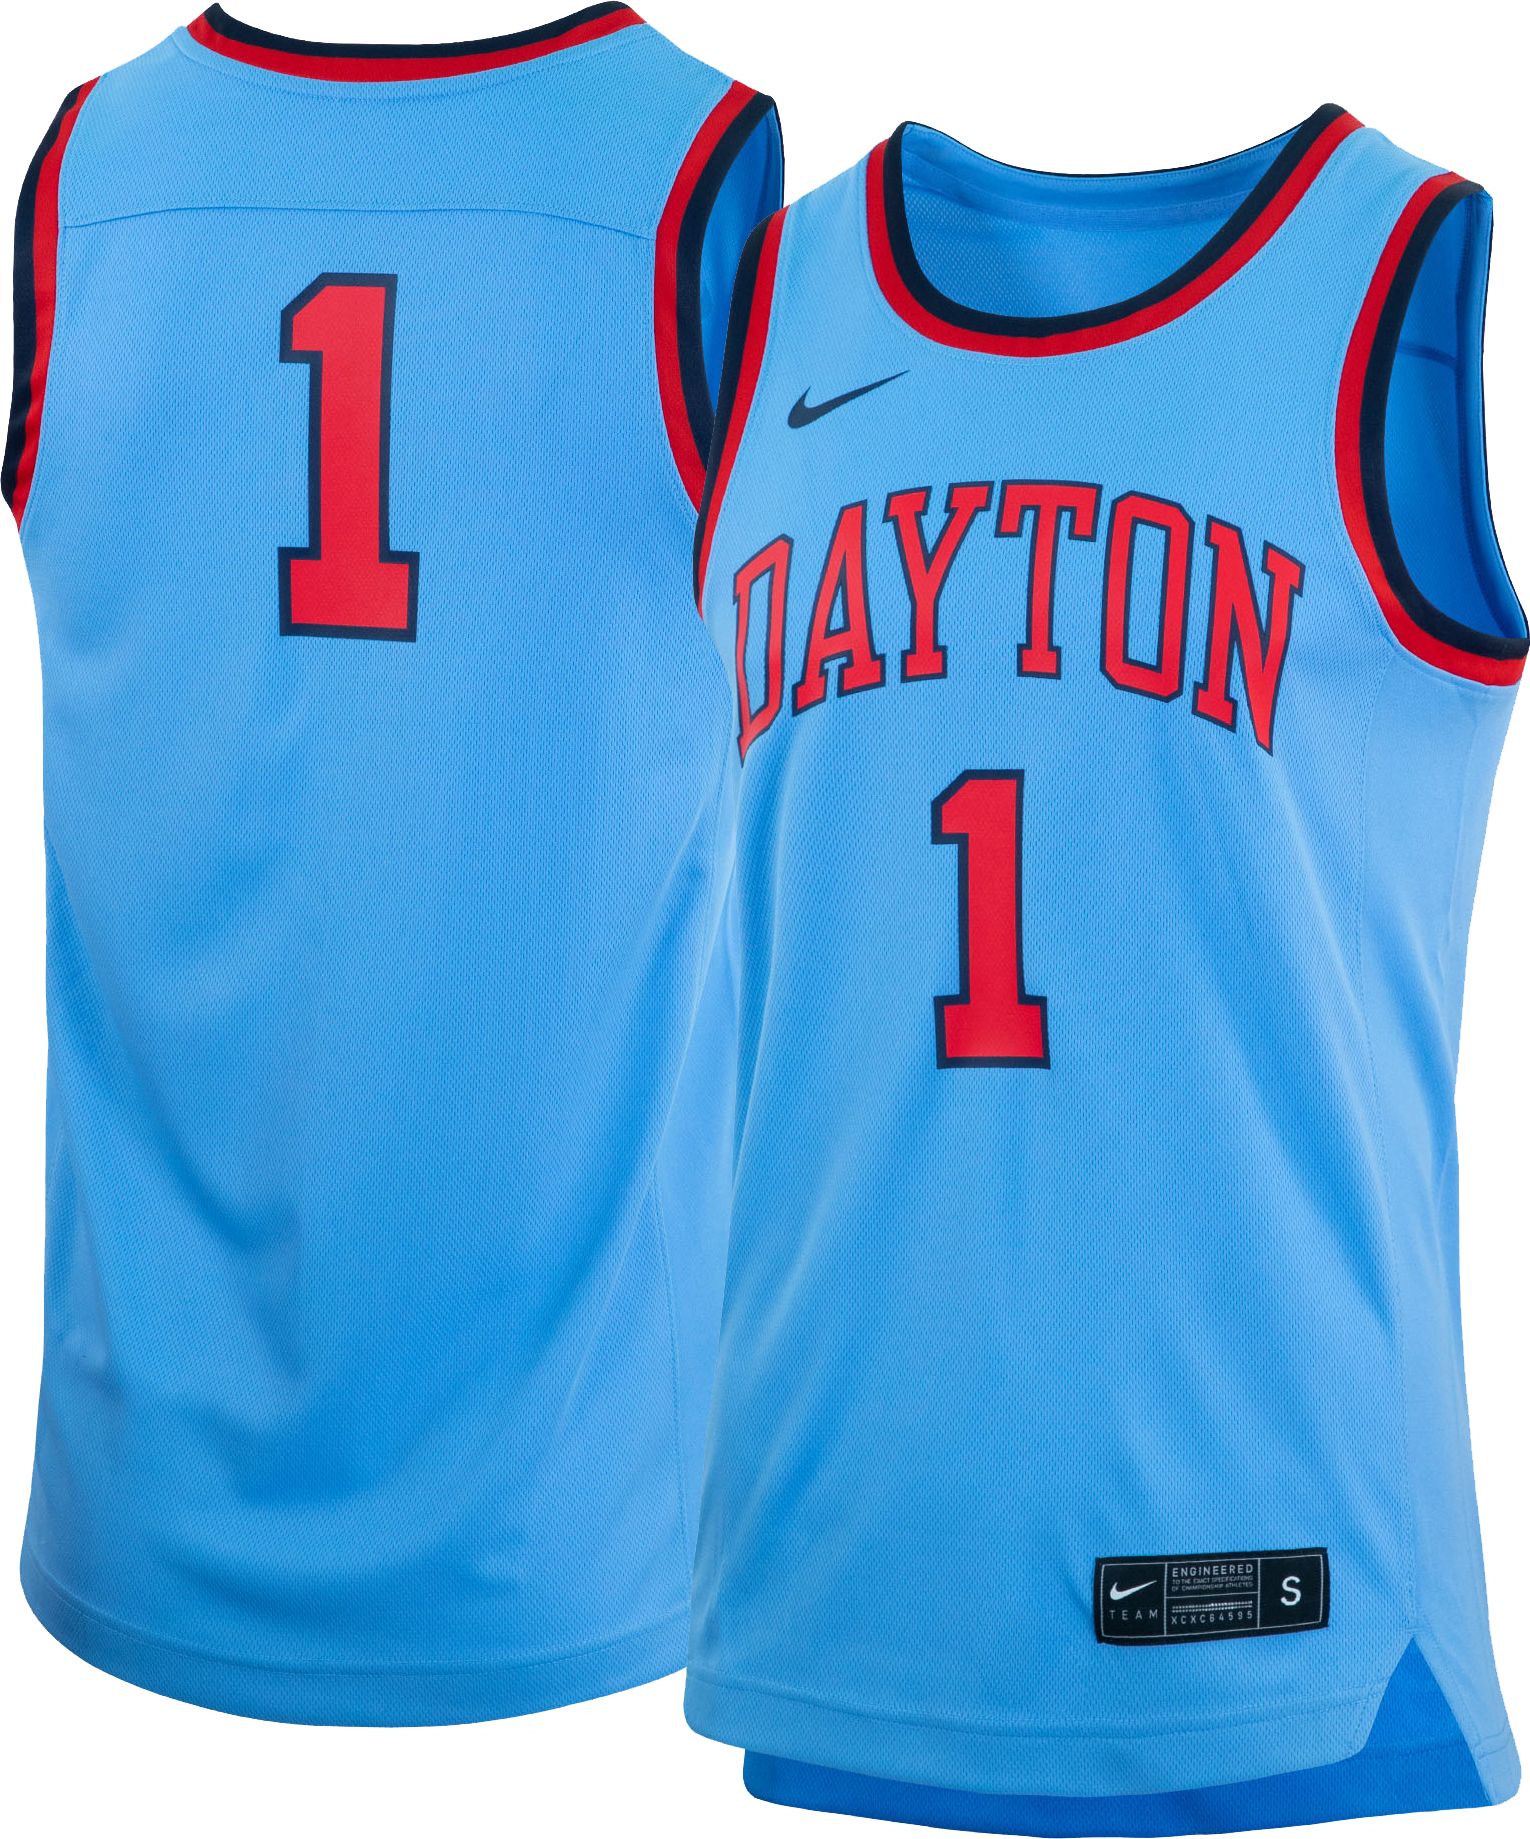 Men's Dayton Flyers #1 Light Blue Replica Basketball Jersey